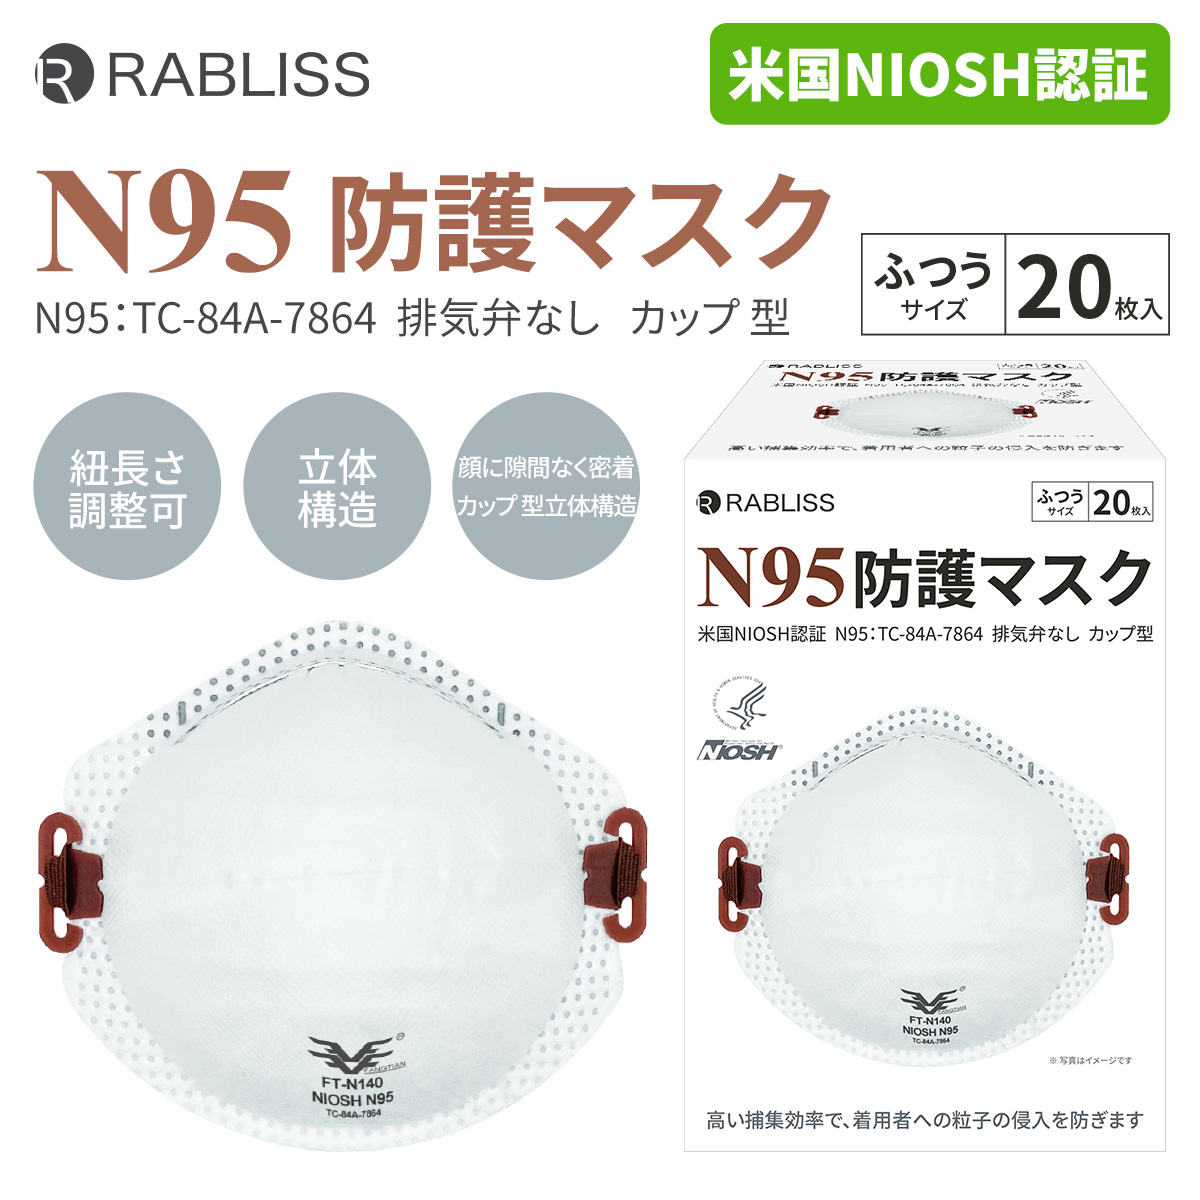 N95カップ型 米国NIOSH認証 N95 保護マスク カップ型 マスク 折りたたみ式 ふつうサイズ 20枚入